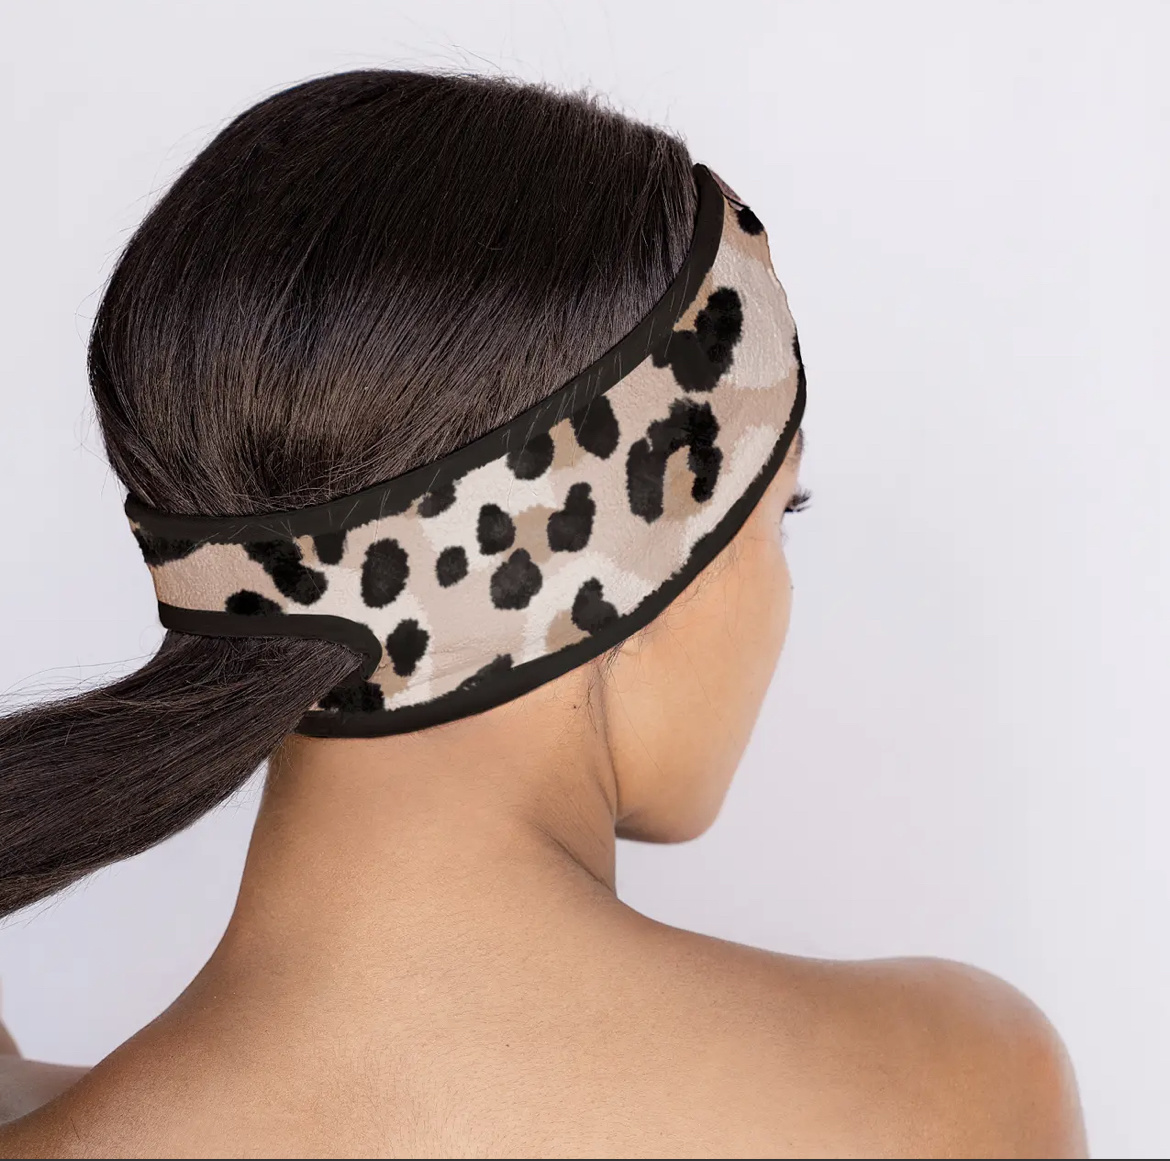 KITSCH Microfiber Spa Headband, Leopard